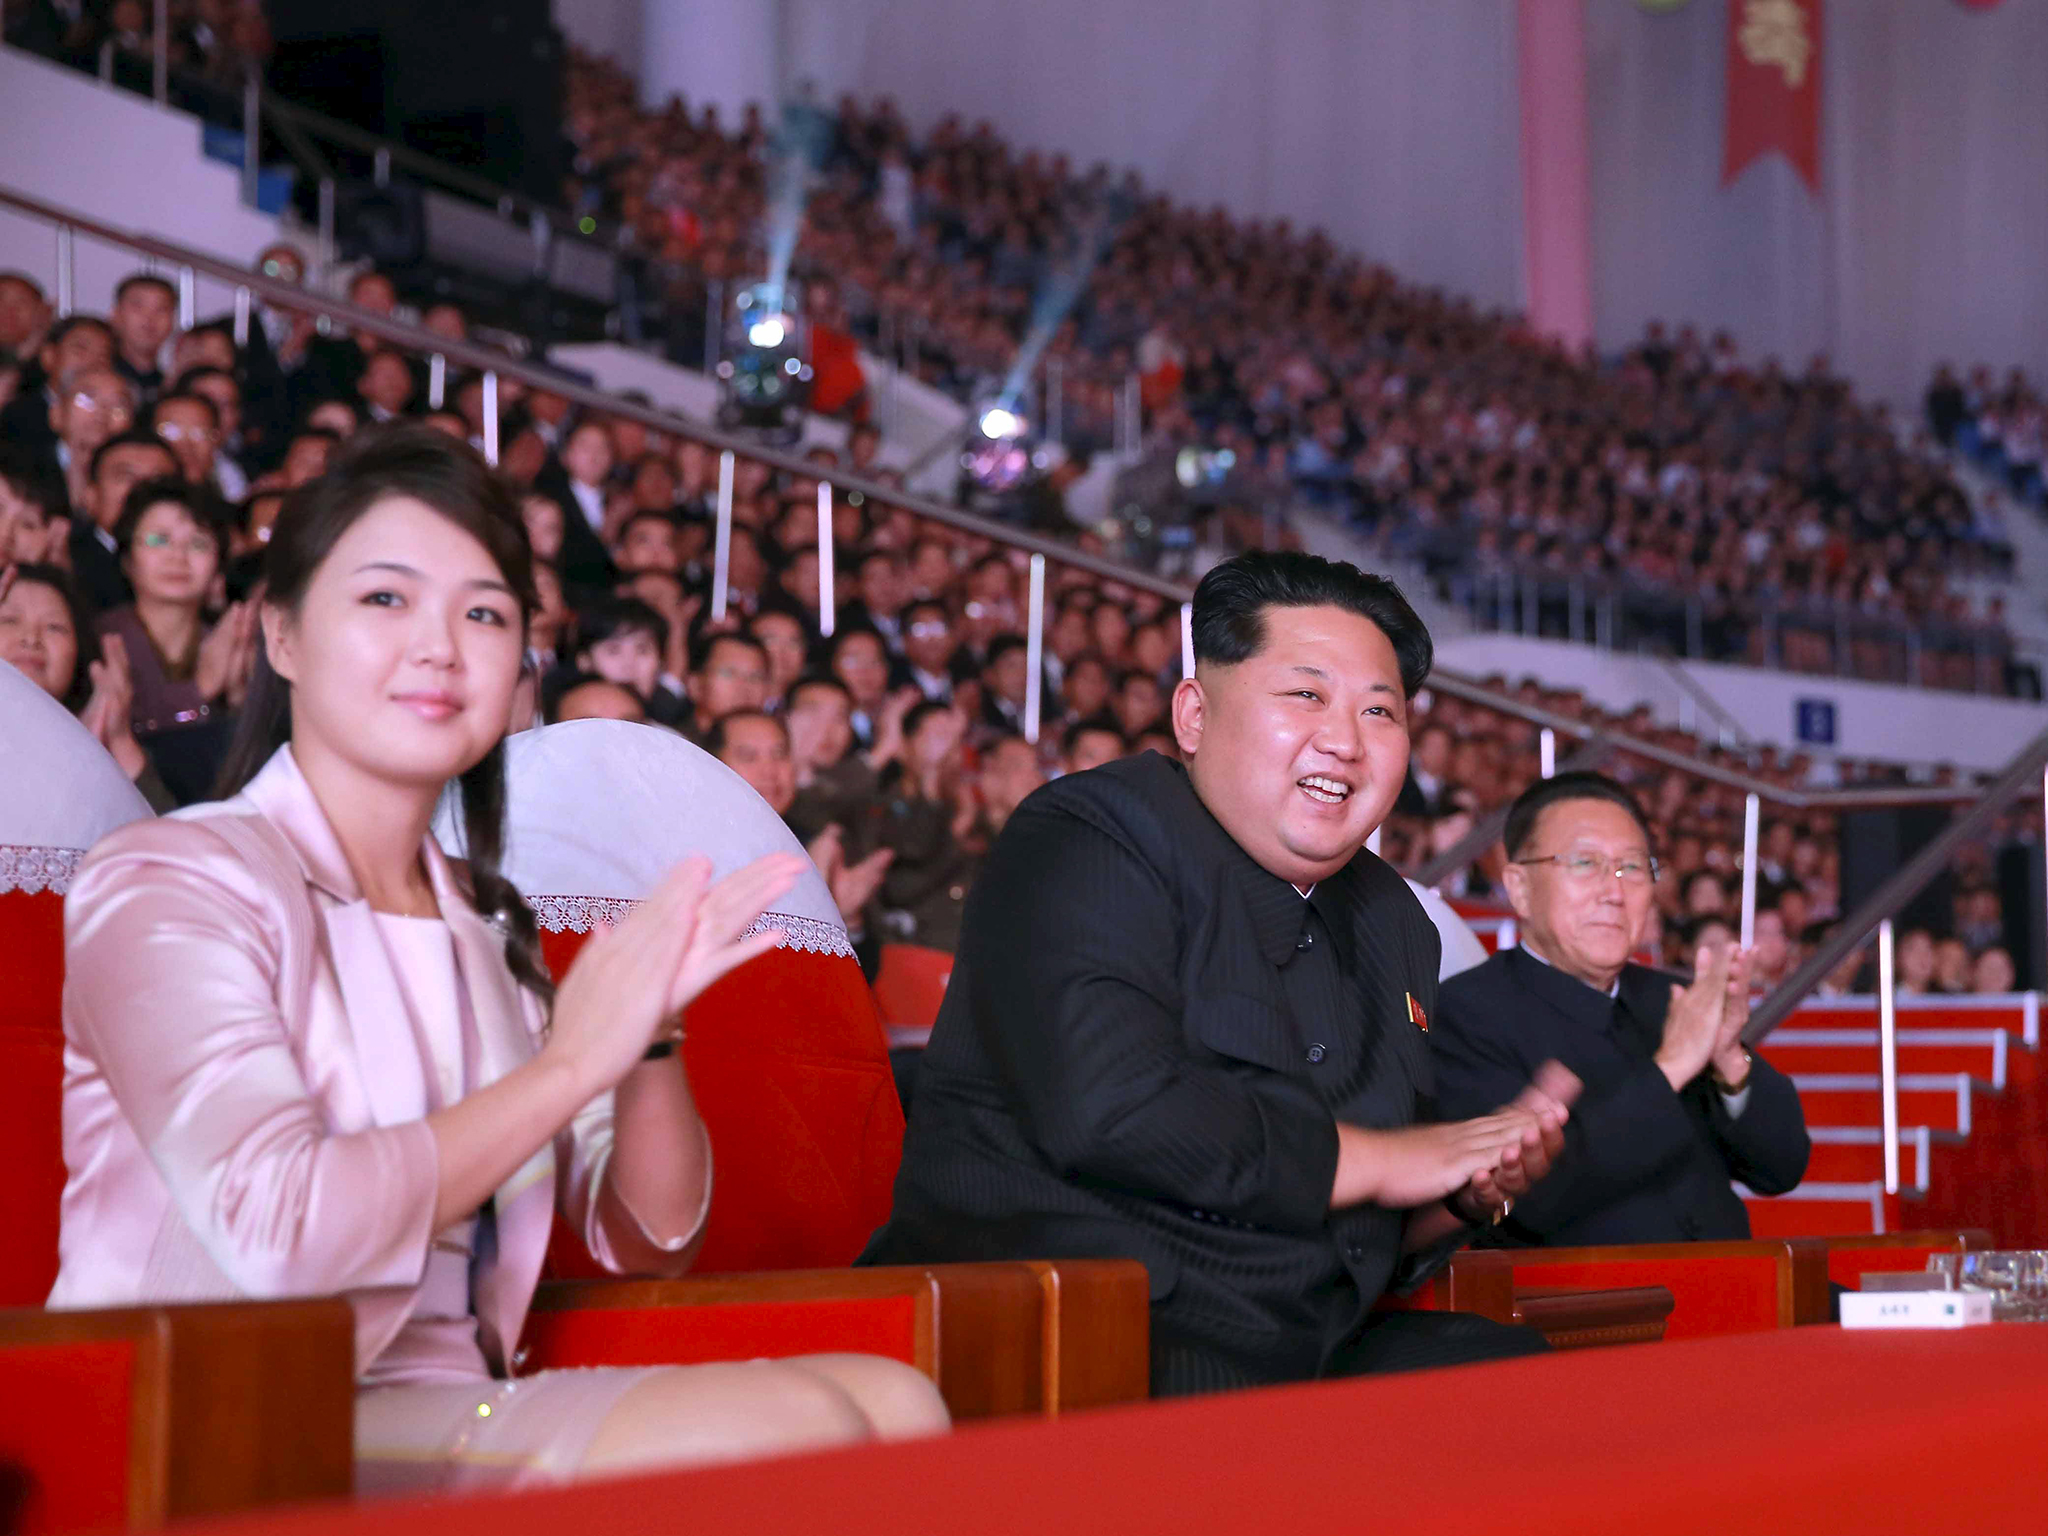 Kim Jong Un with his wife